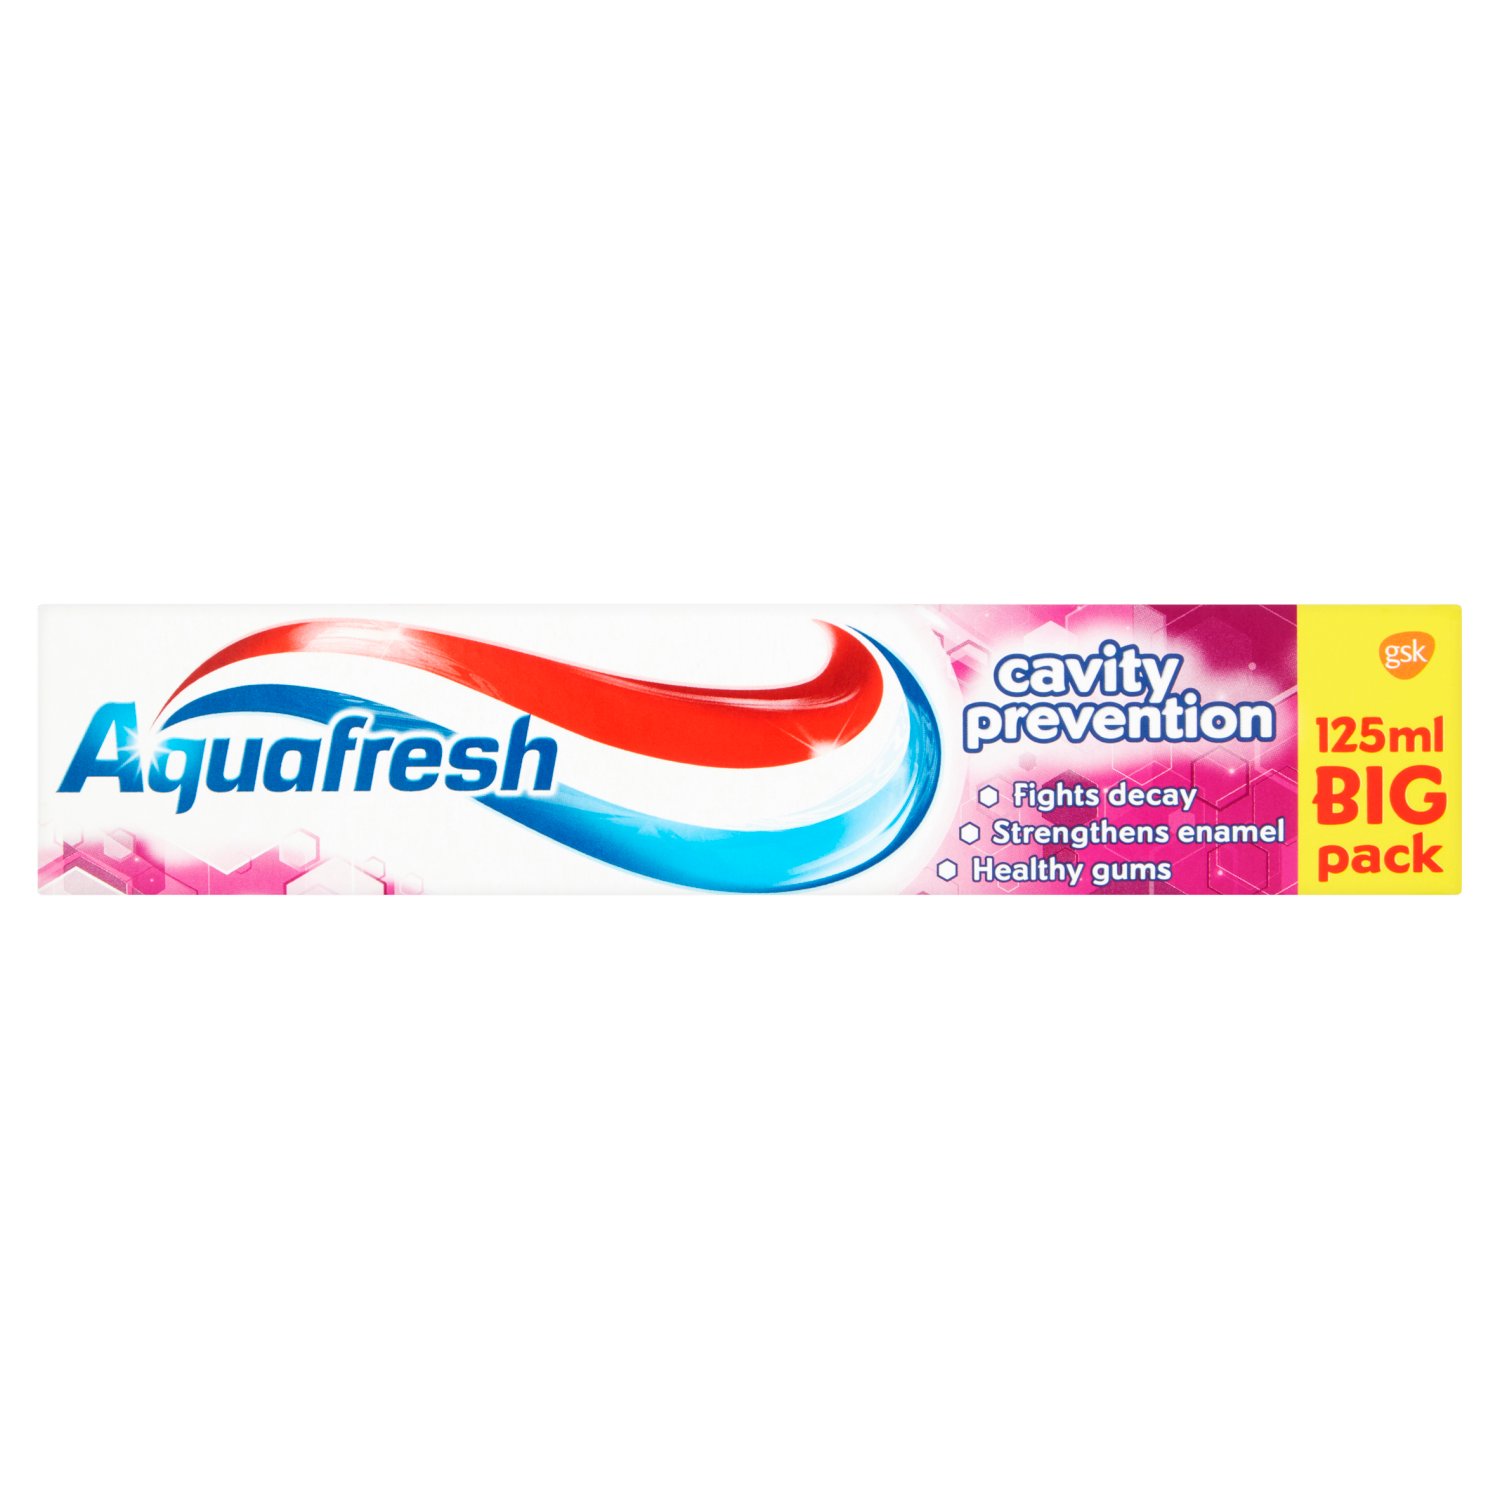 Aquafresh Cavity Prevention Toothpaste (125 ml)